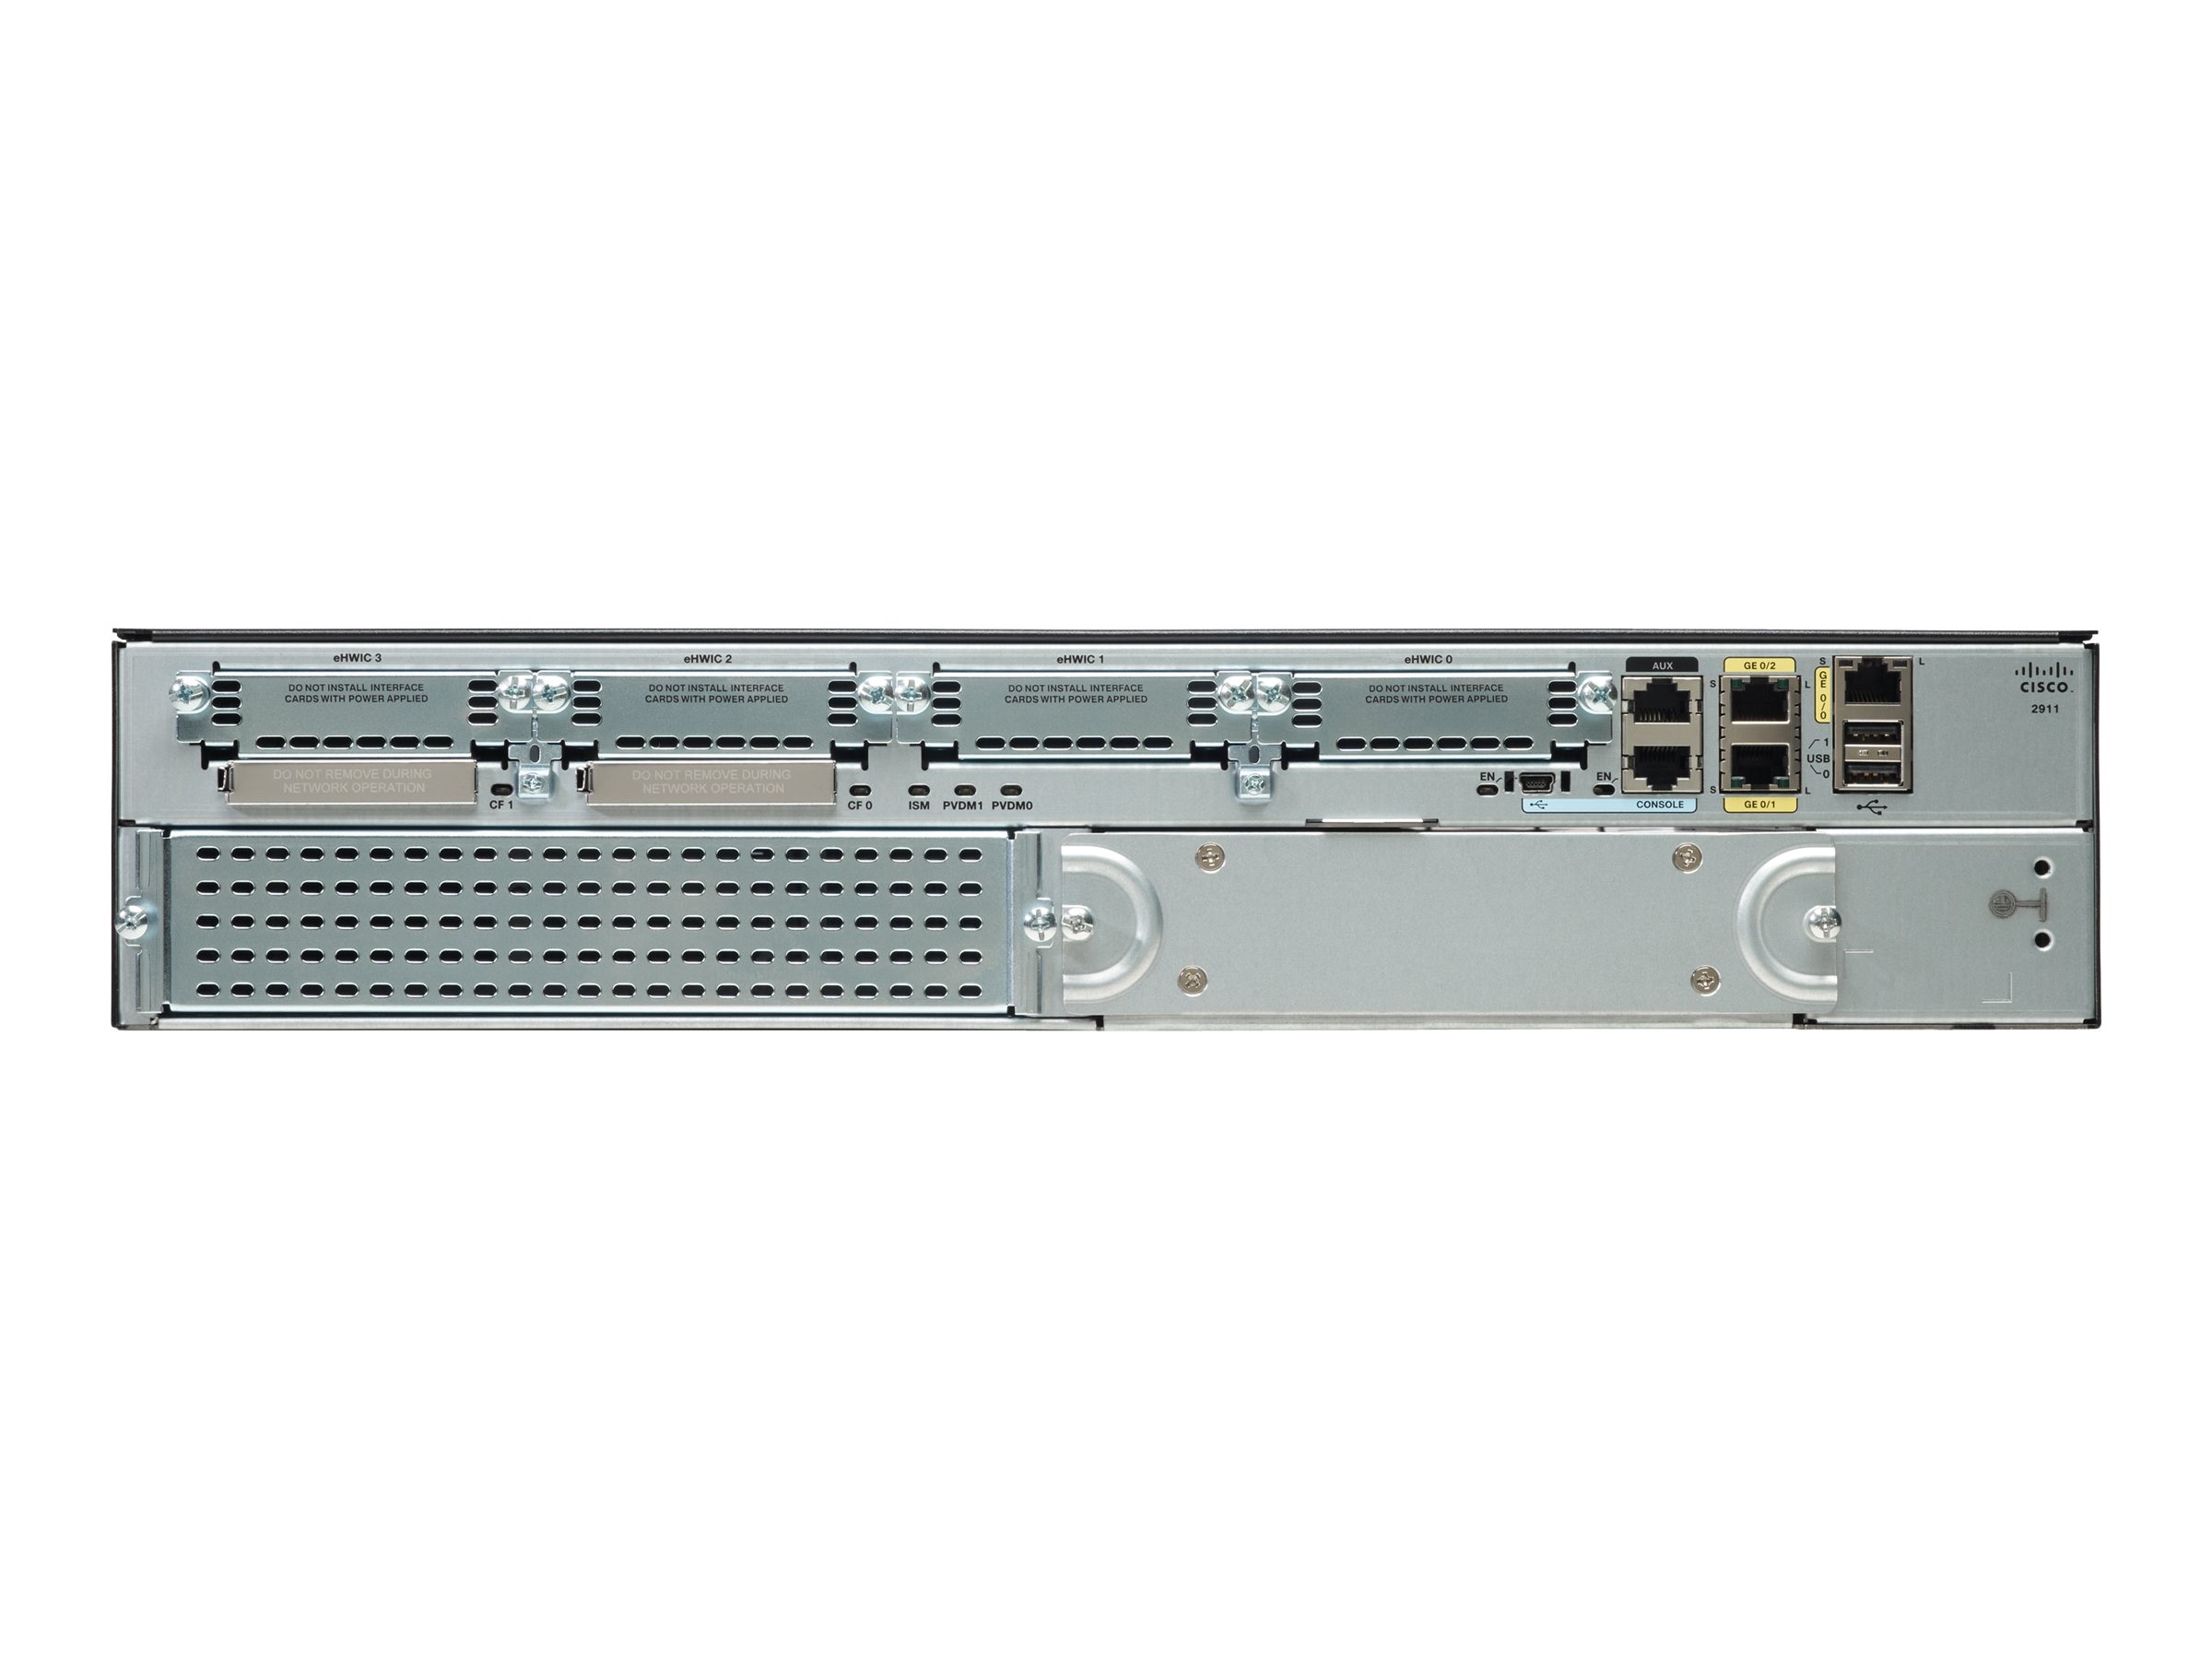 Cisco 2911 w 3 Onboard GE, 4 EHWIC Slots, 2 DSP Slots, 1 ISM Slot, 256MB  CF, 512MB DRAM, IP Base